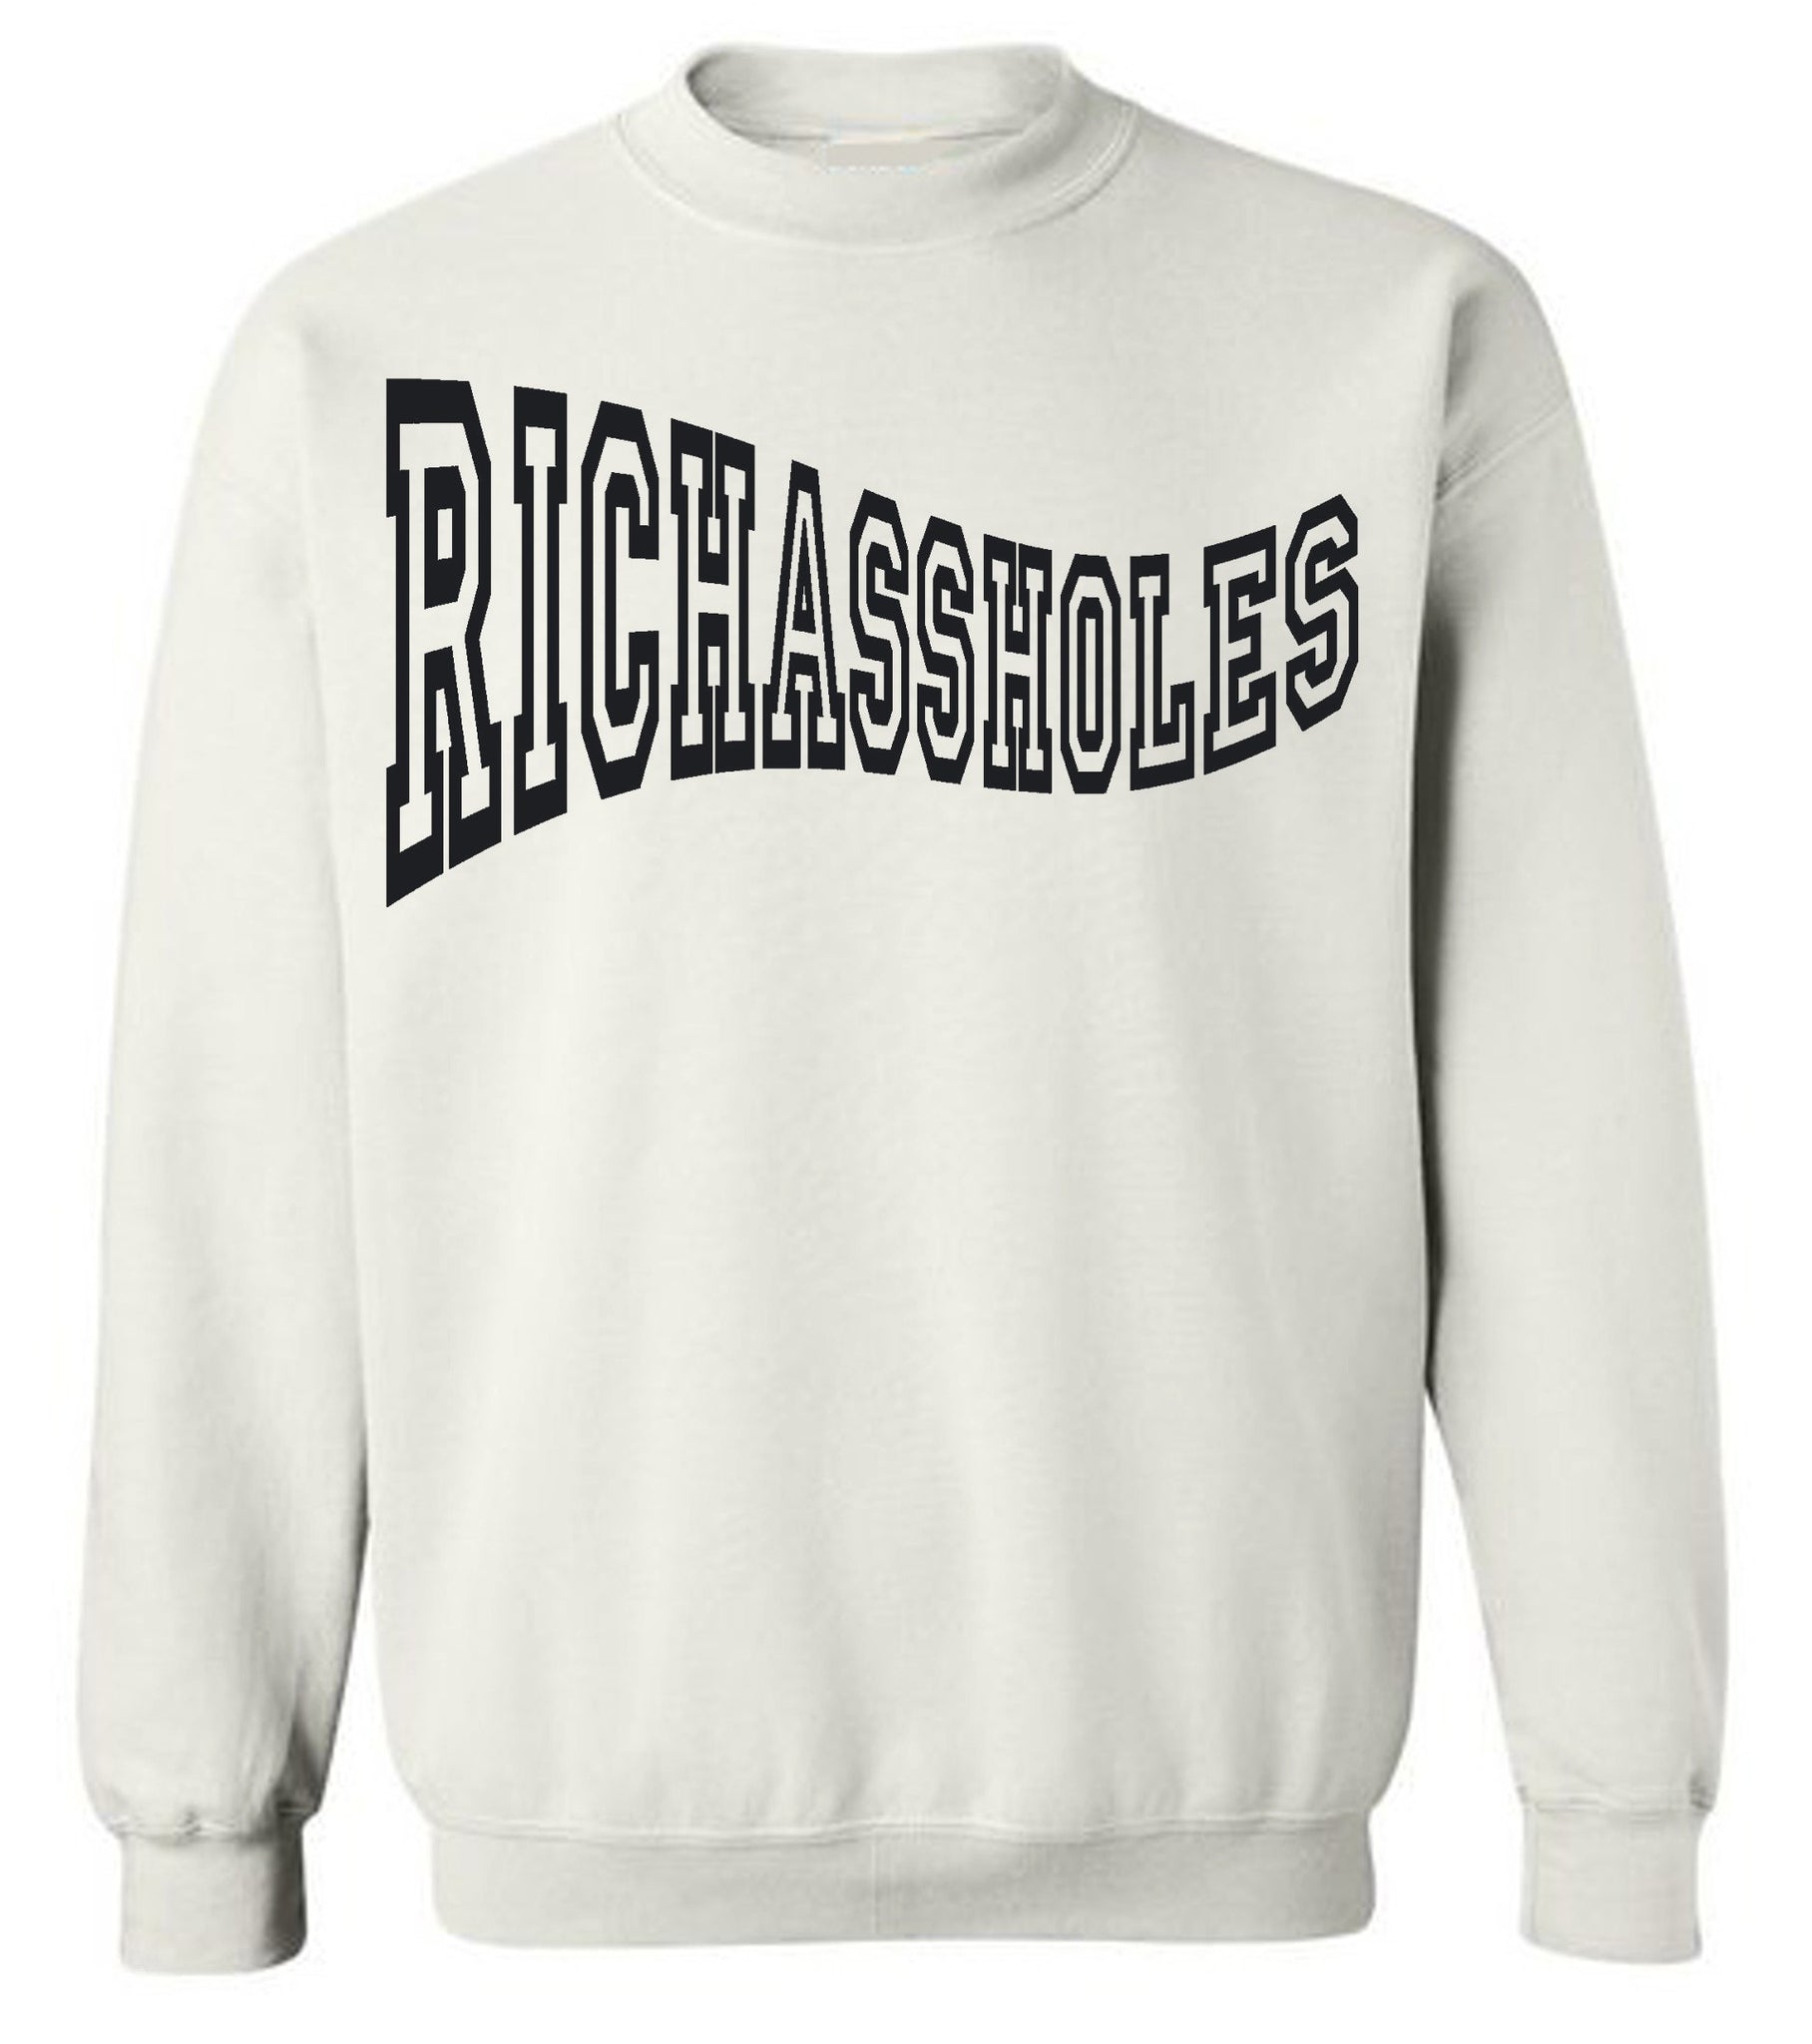 RichAsshole Sweater  cocaine white